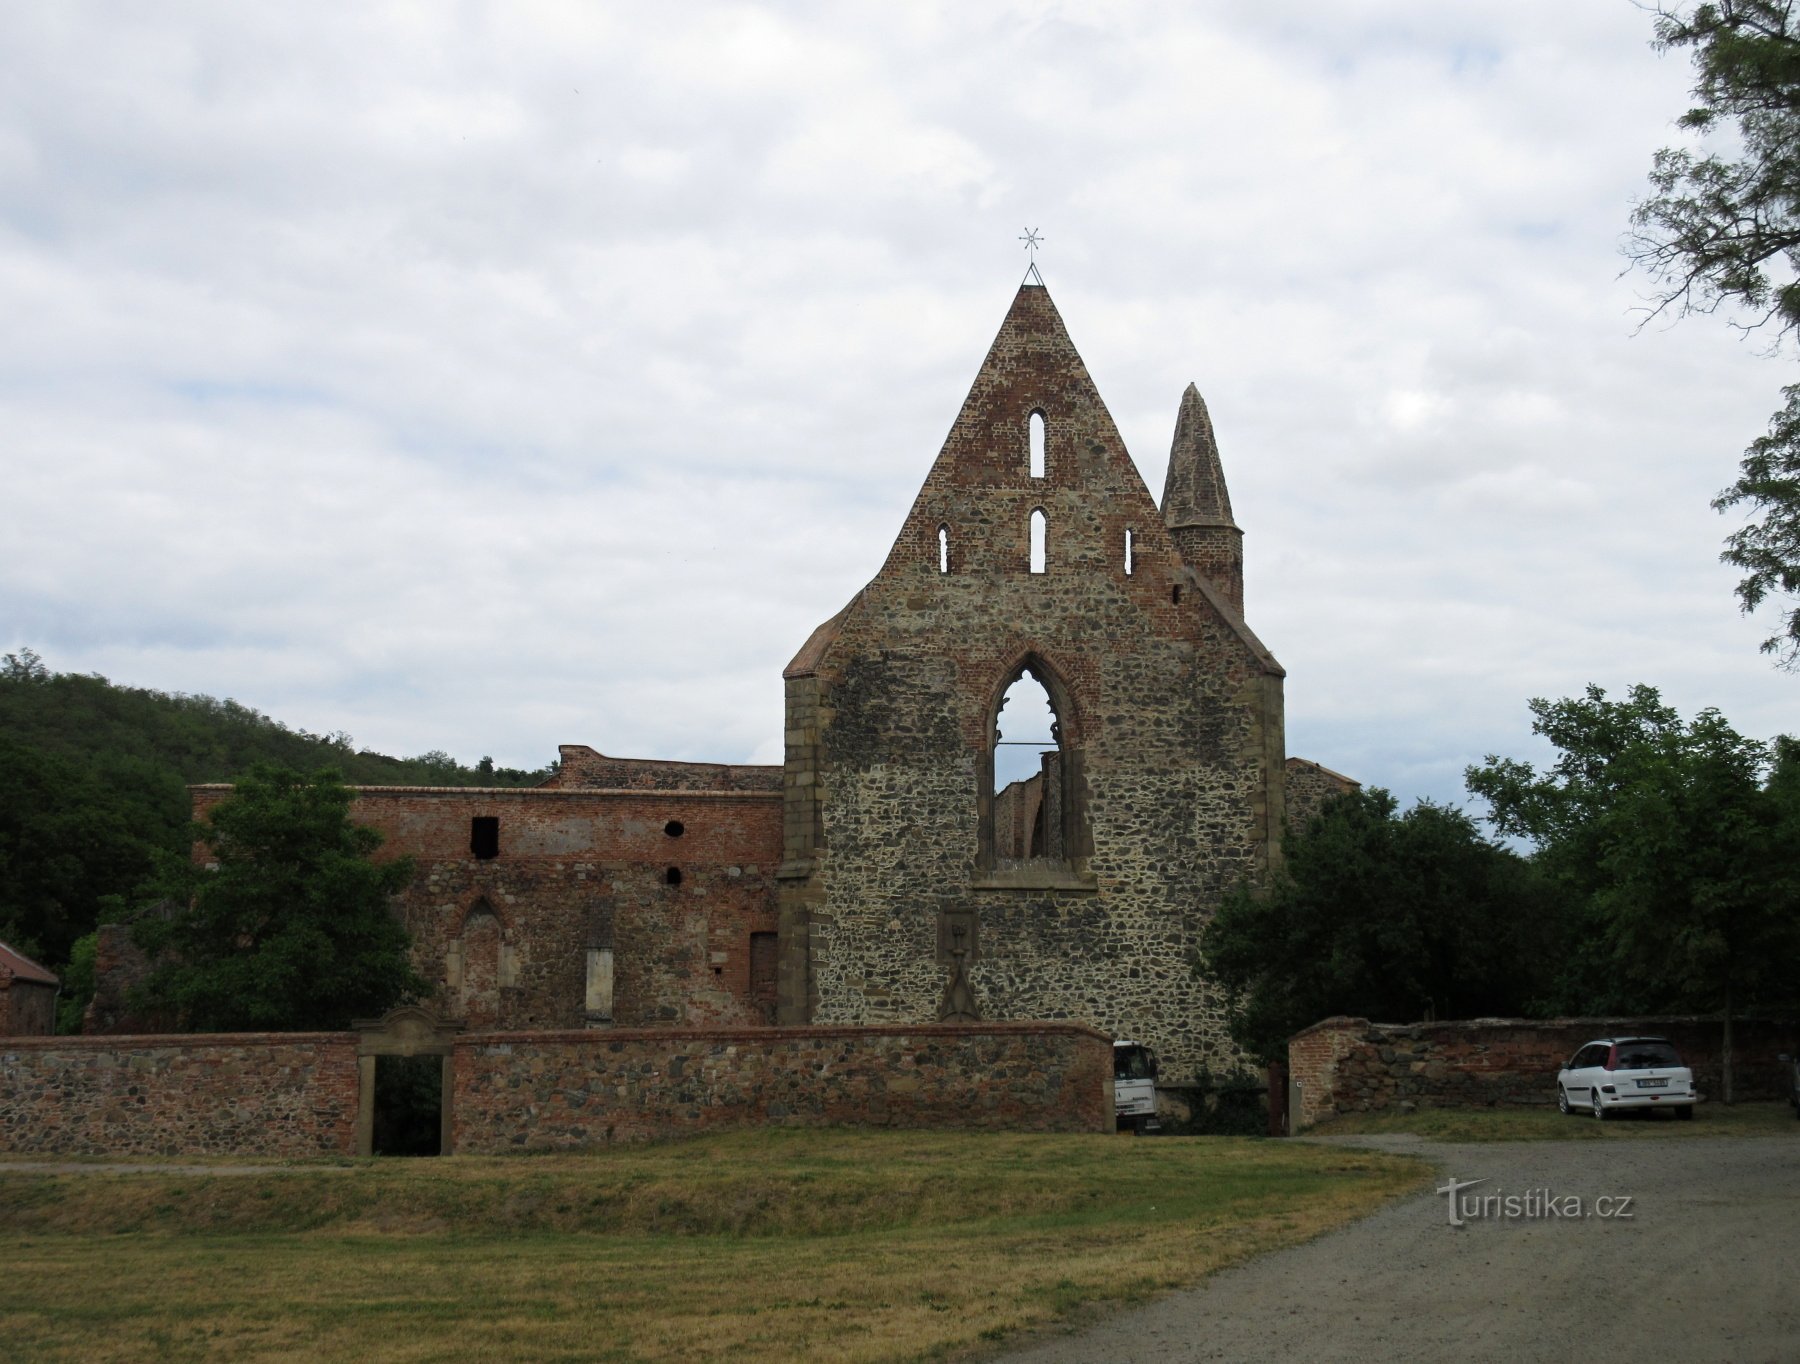 Dolní Kounice – storia, rovine del monastero, castello, monumenti ebraici